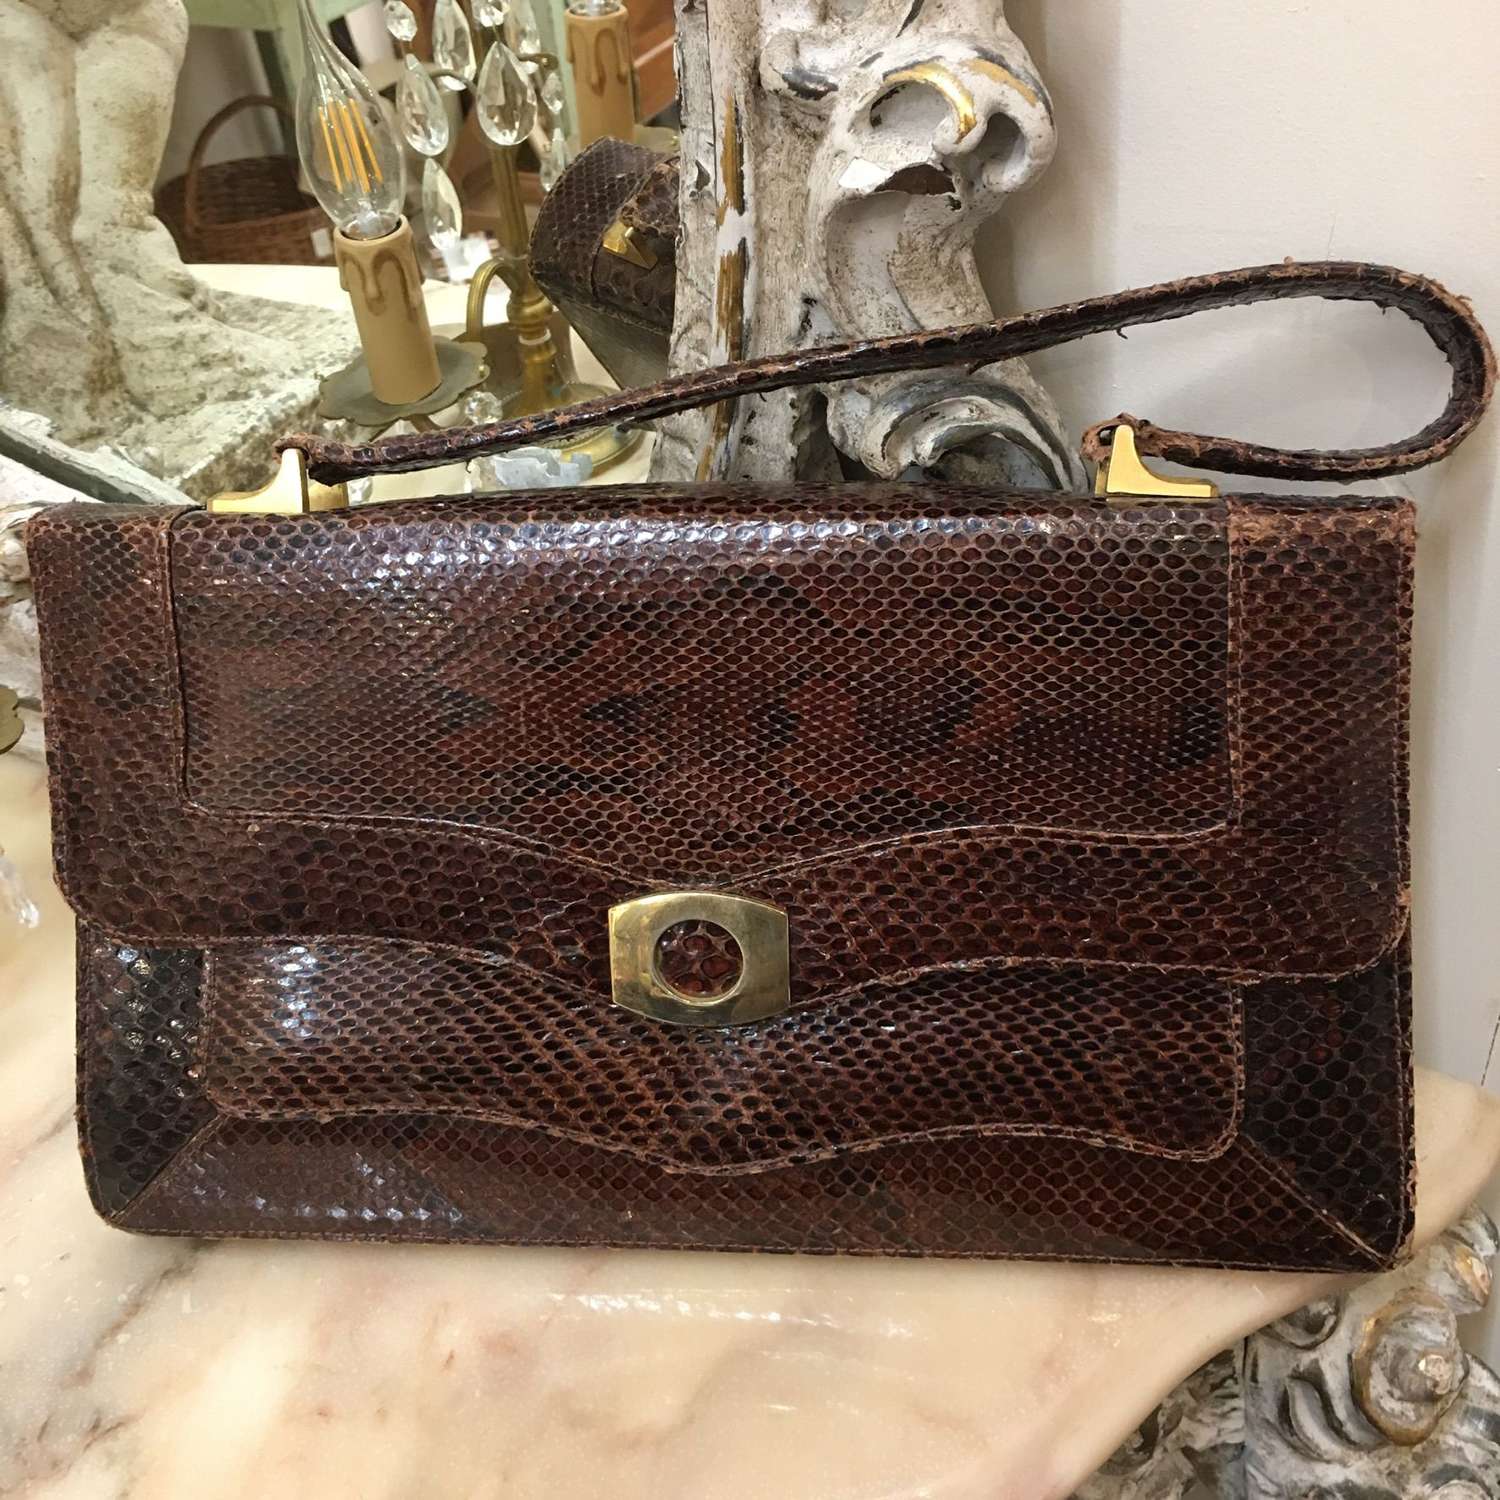 Vintage brown snakeskin handbag